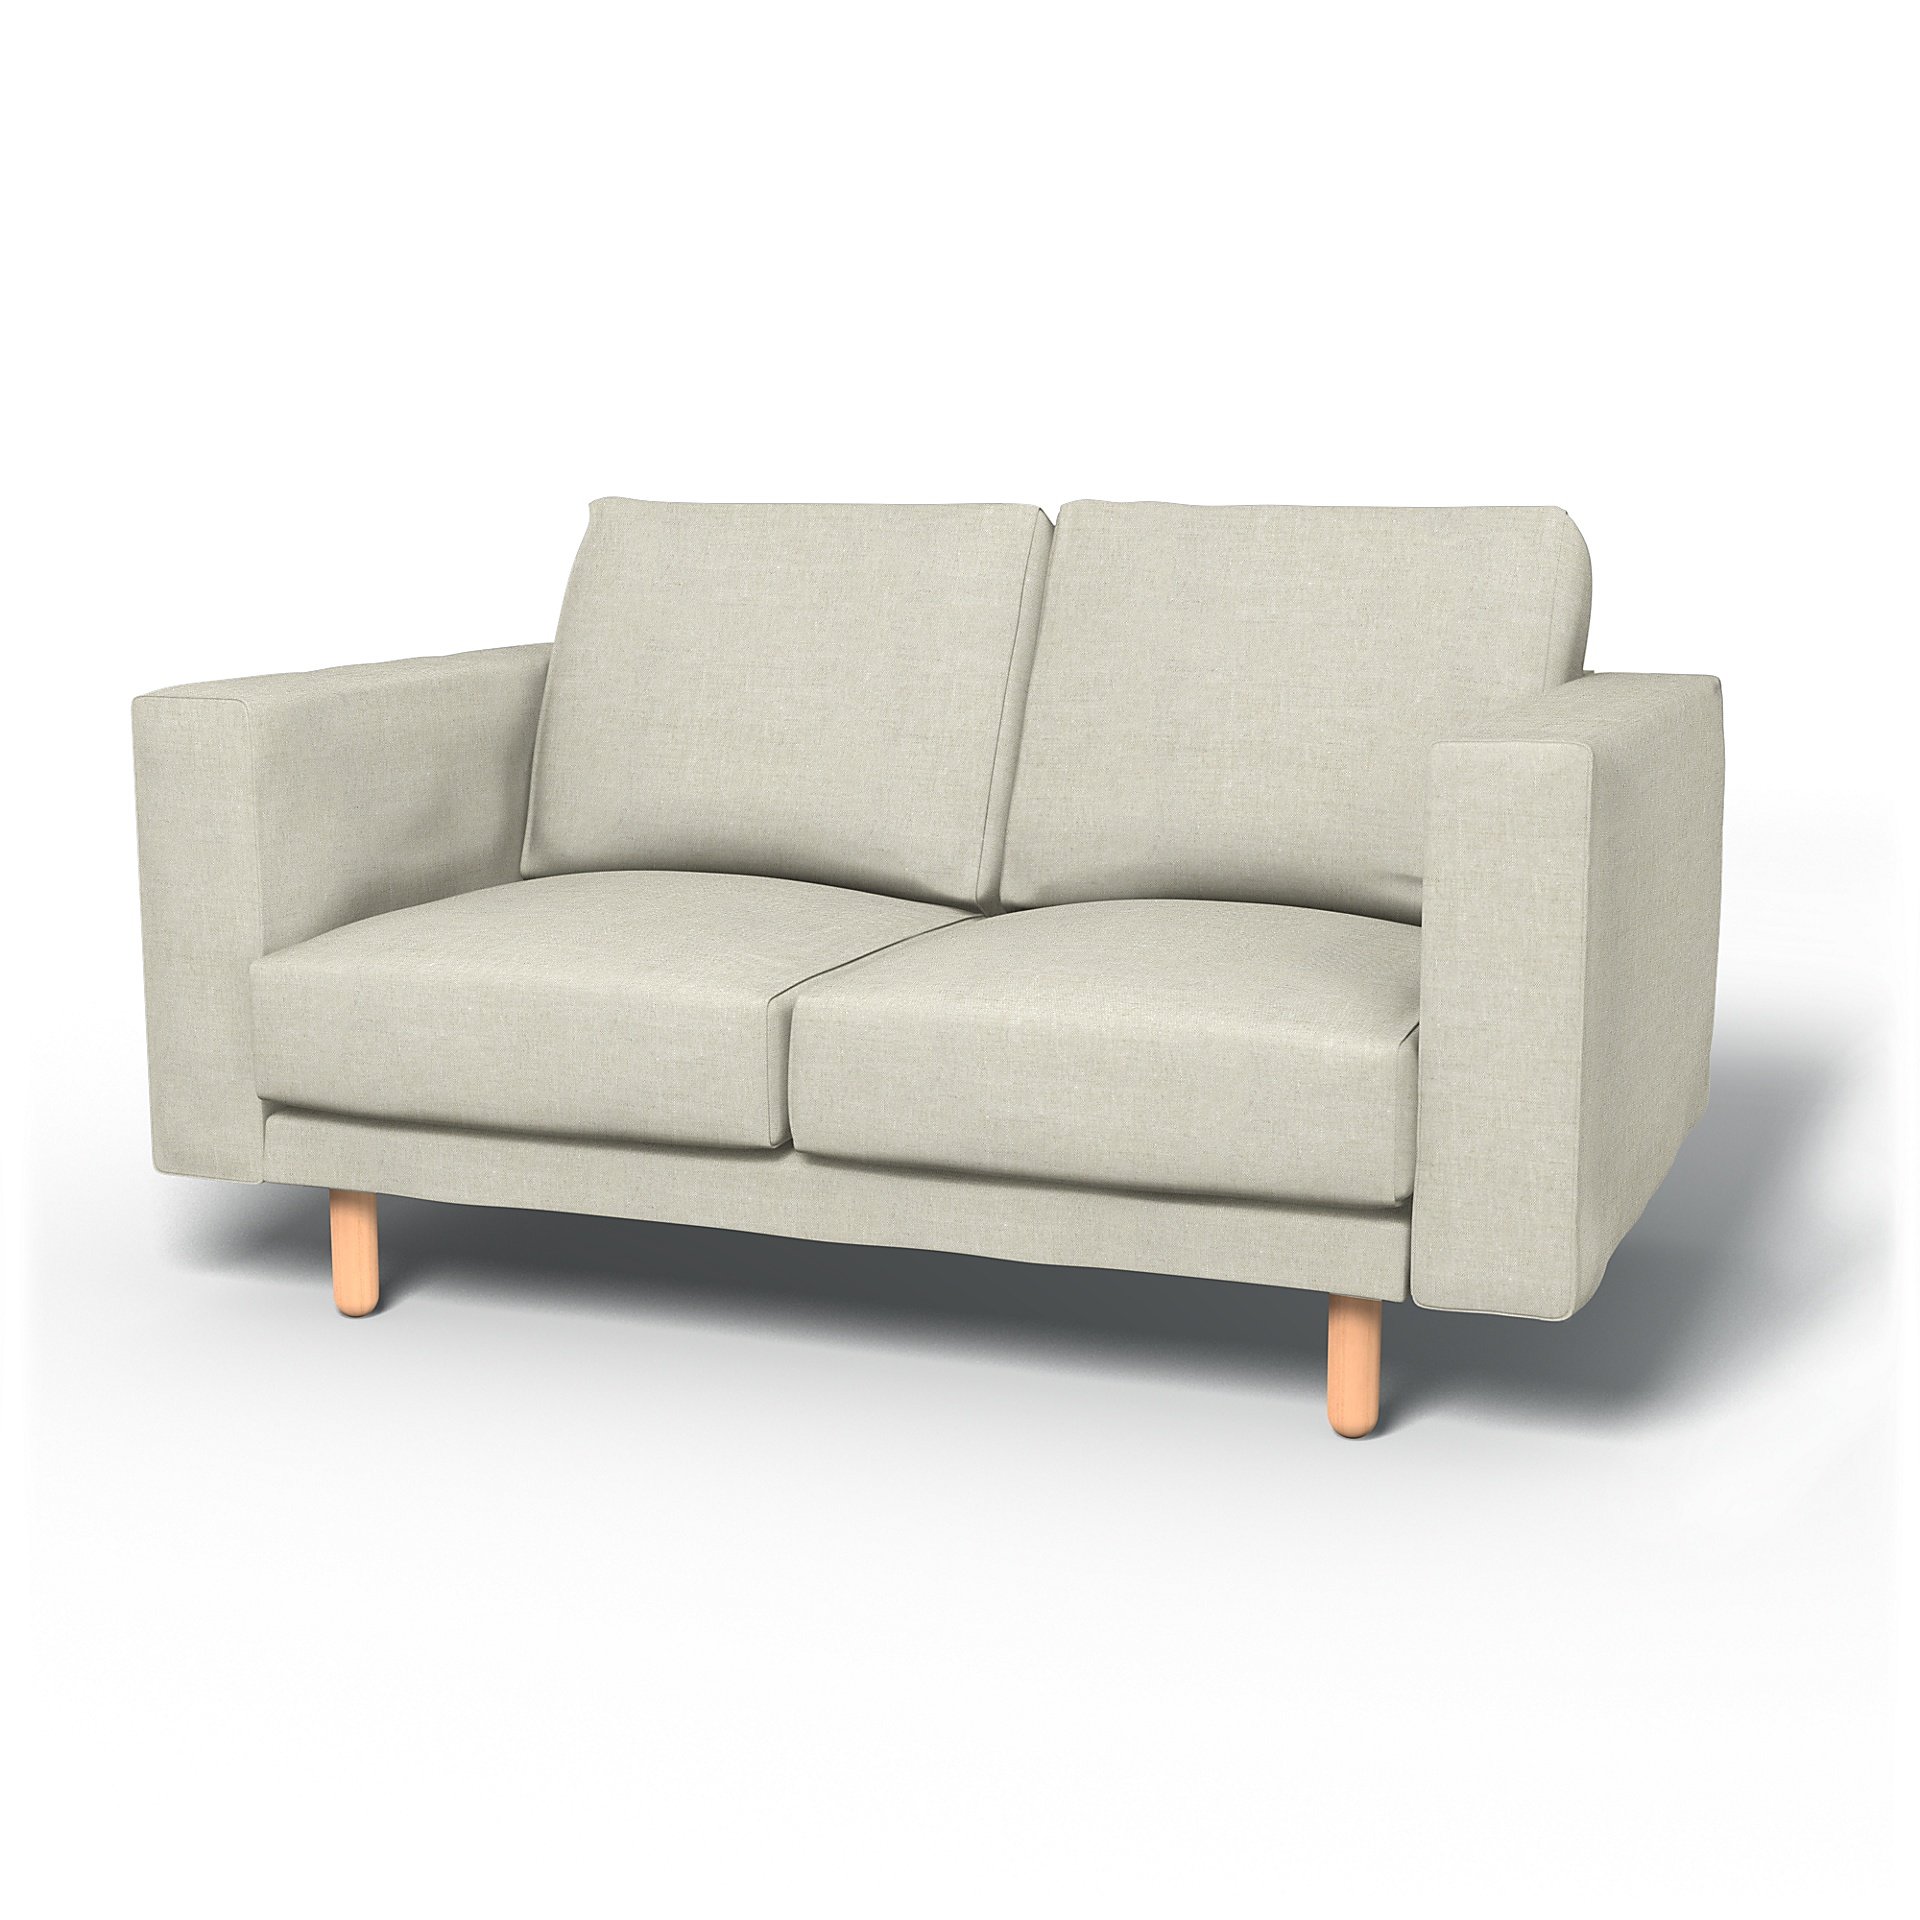 IKEA - Norsborg 2 Seater Sofa Cover, Natural, Linen - Bemz